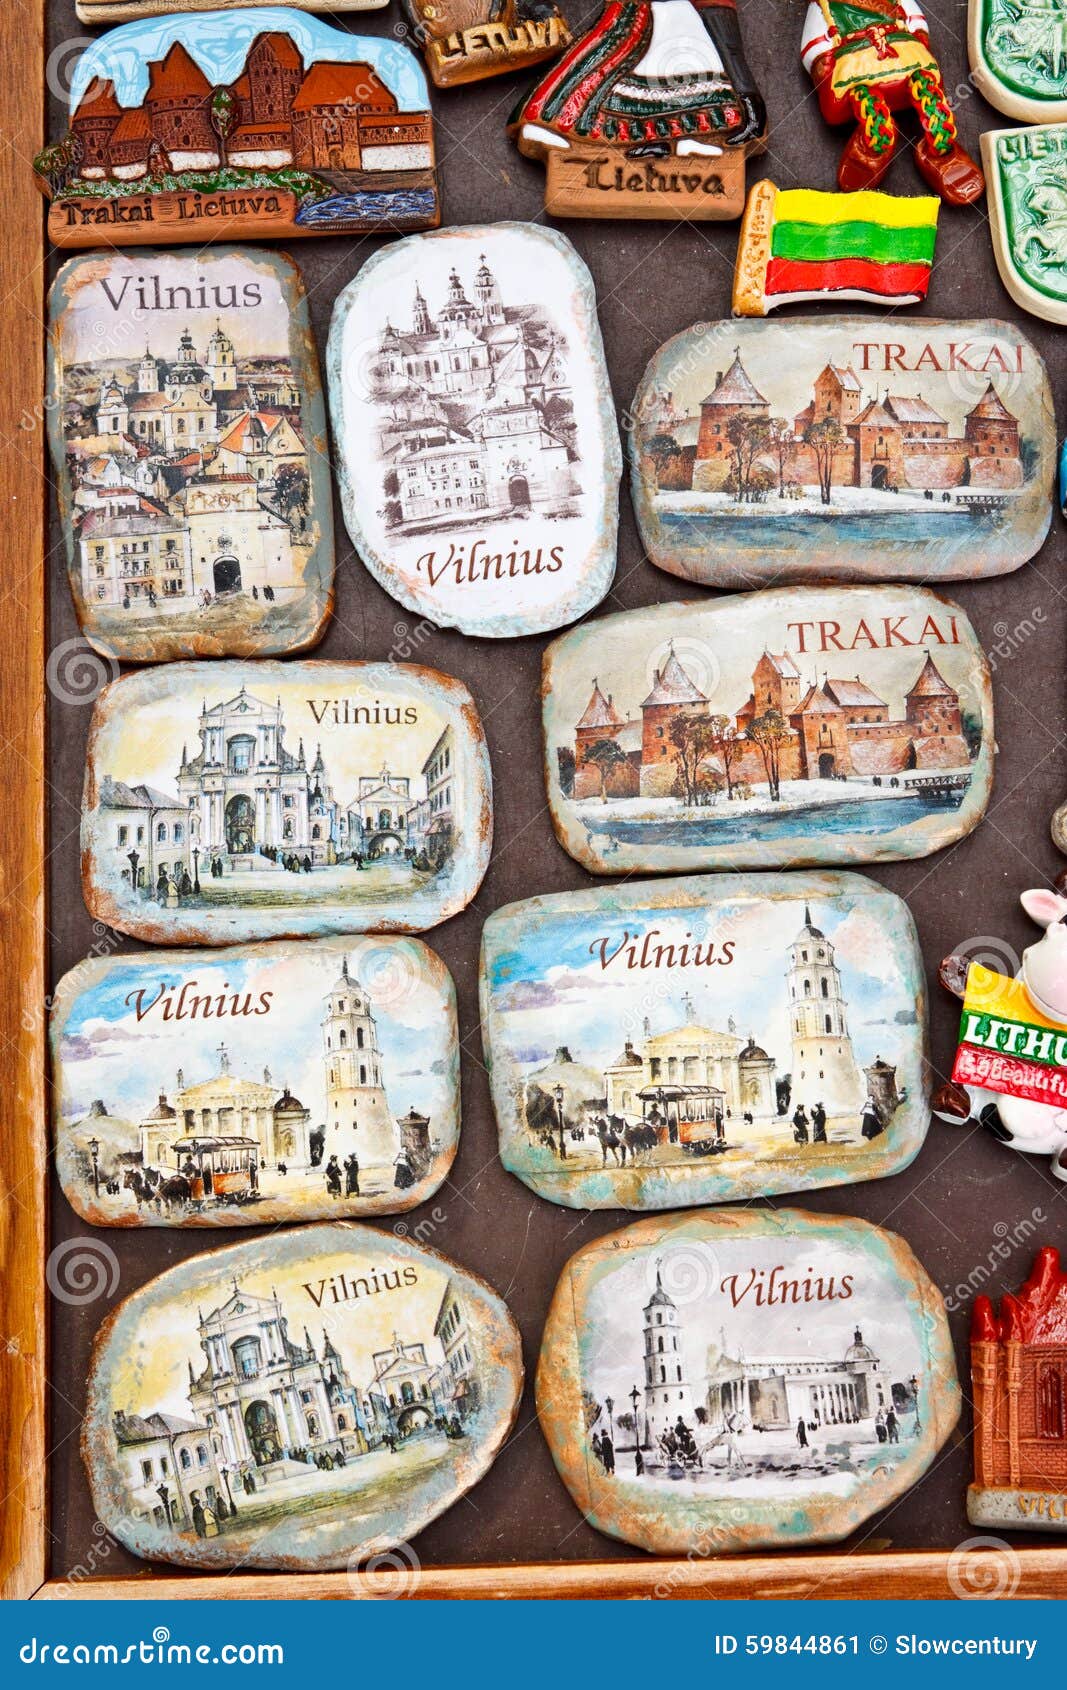 Fridge Magnet Lithuania Map Huge Travel Tourist Souvenir Collection & Gift B002 